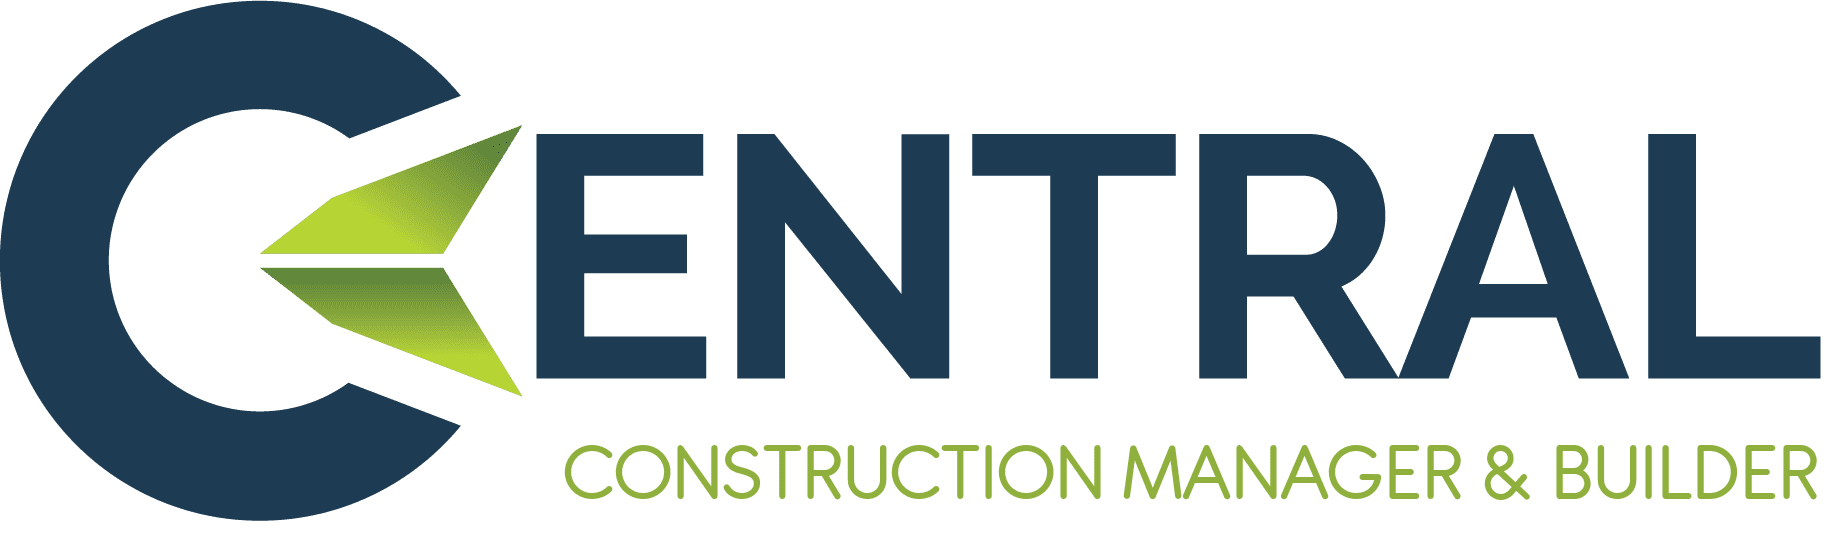 Central Construction Manager & Builder